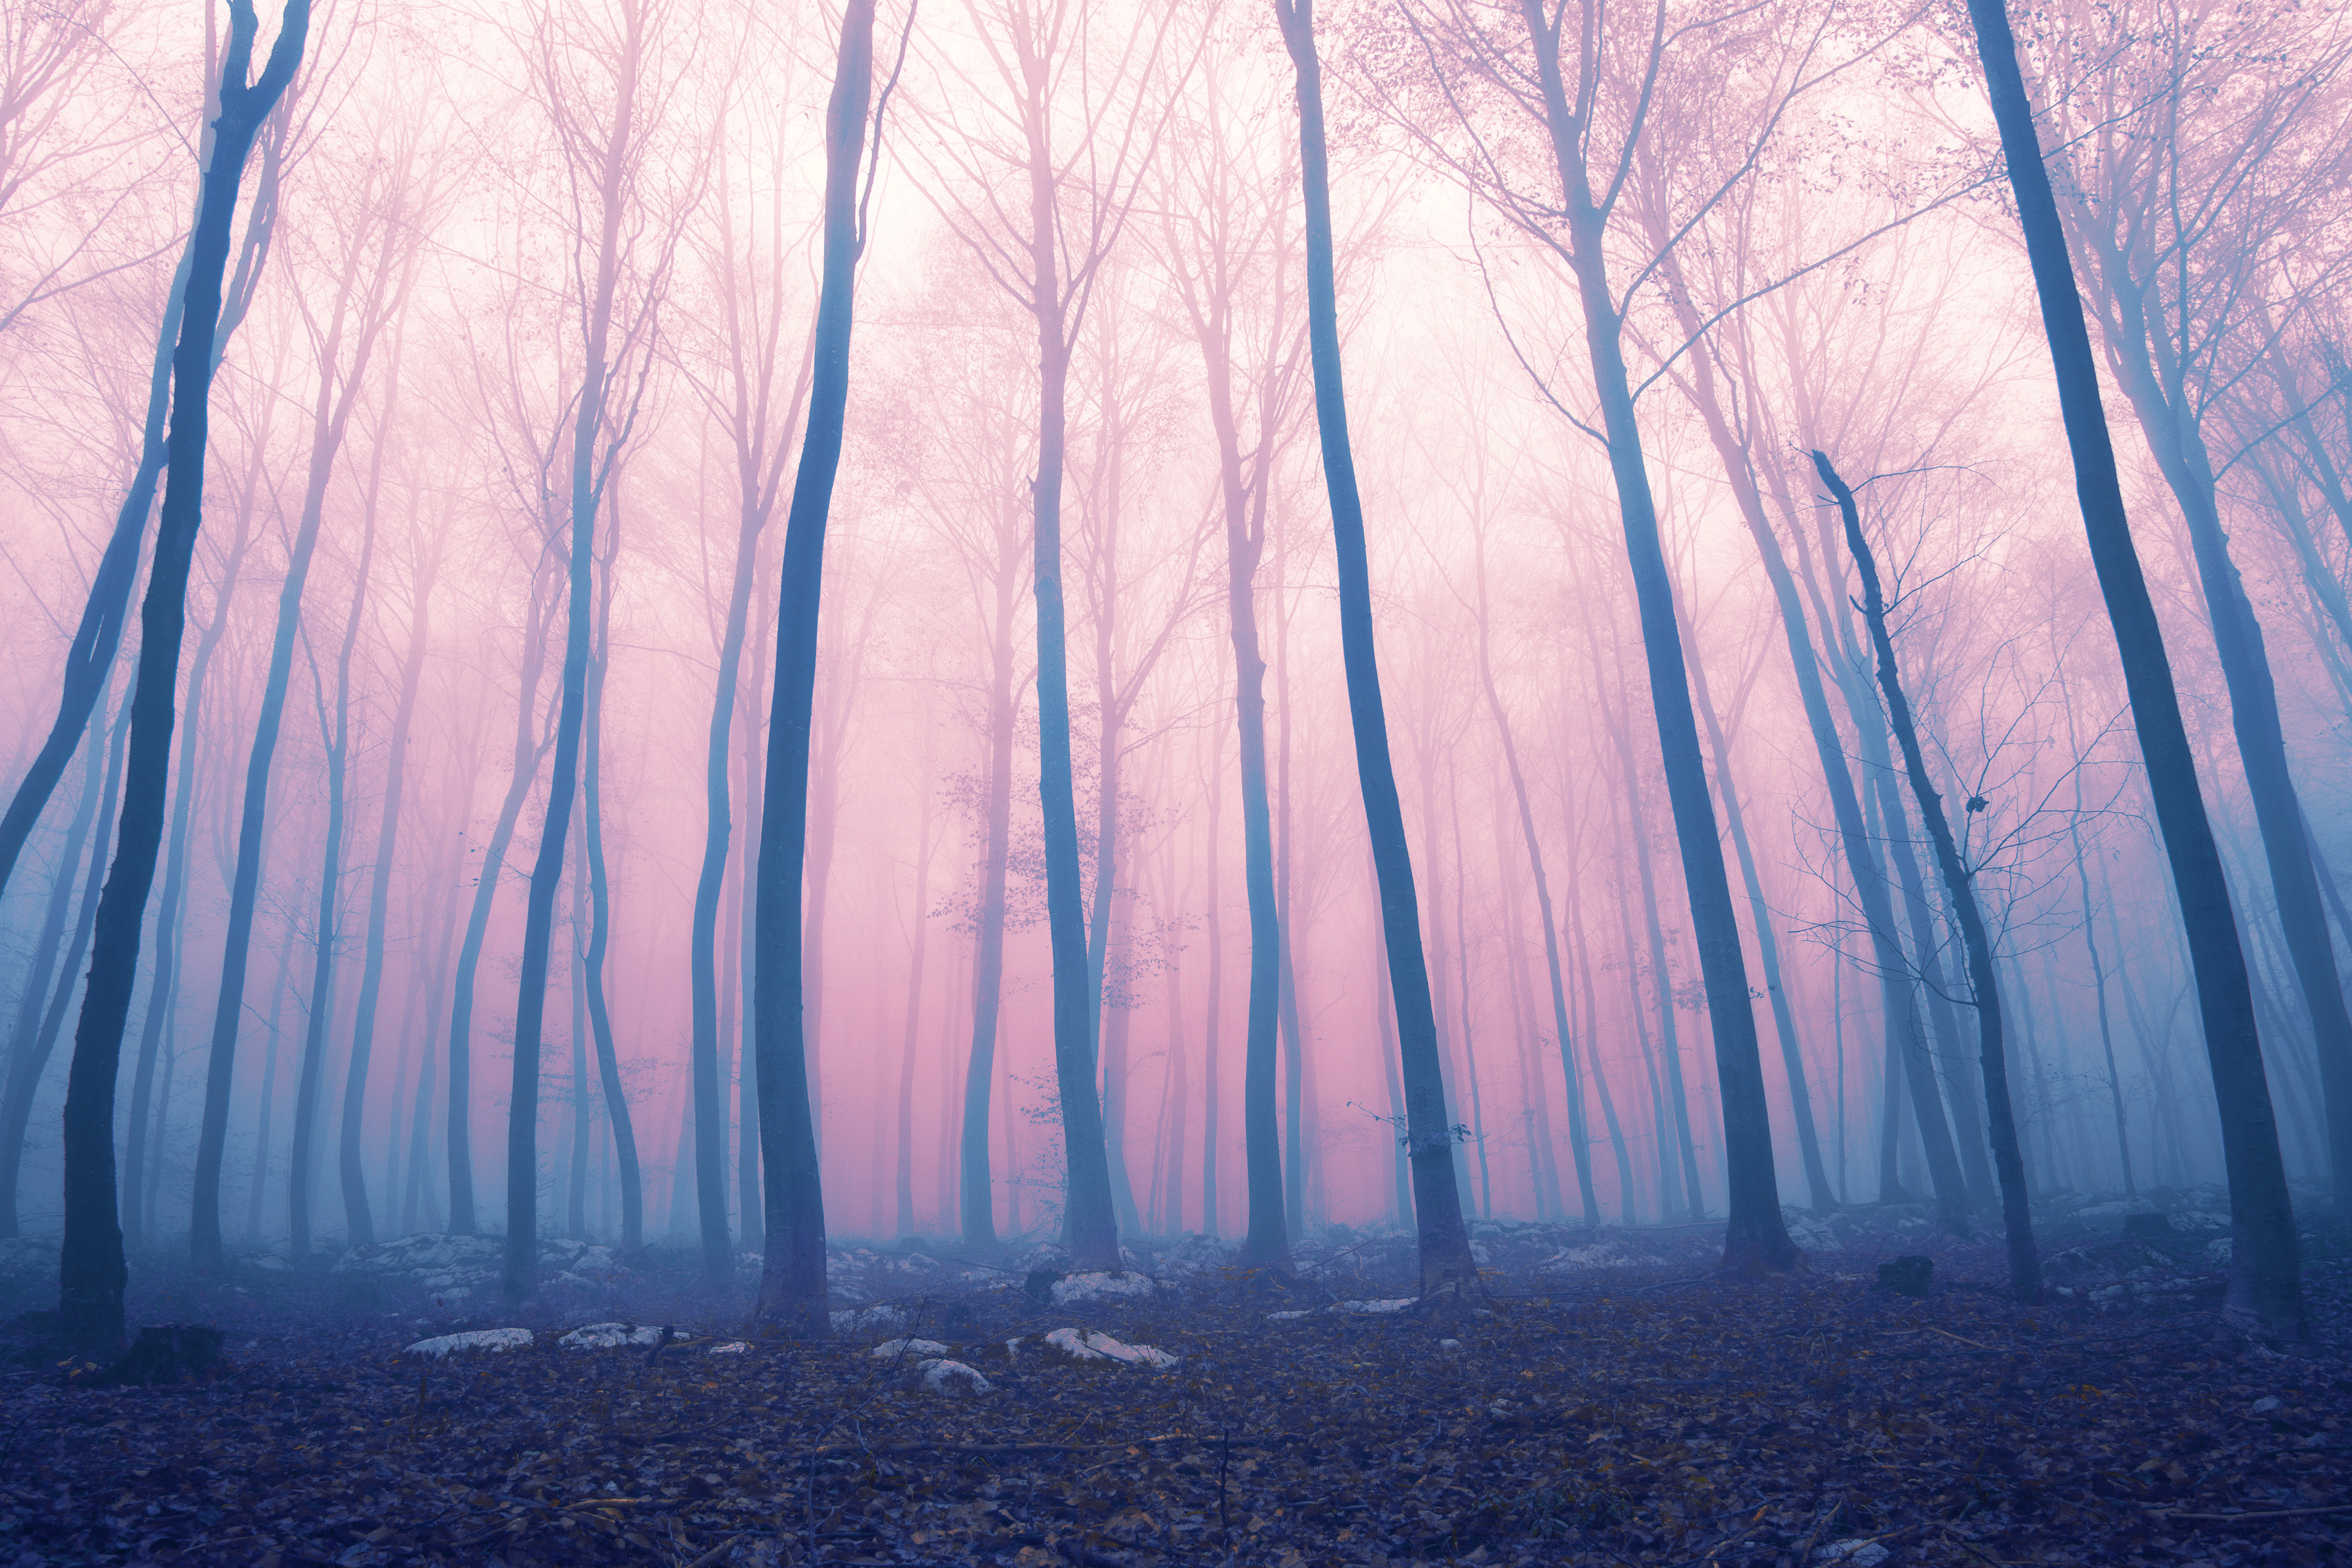 Fantasy color foggy fairytale forest